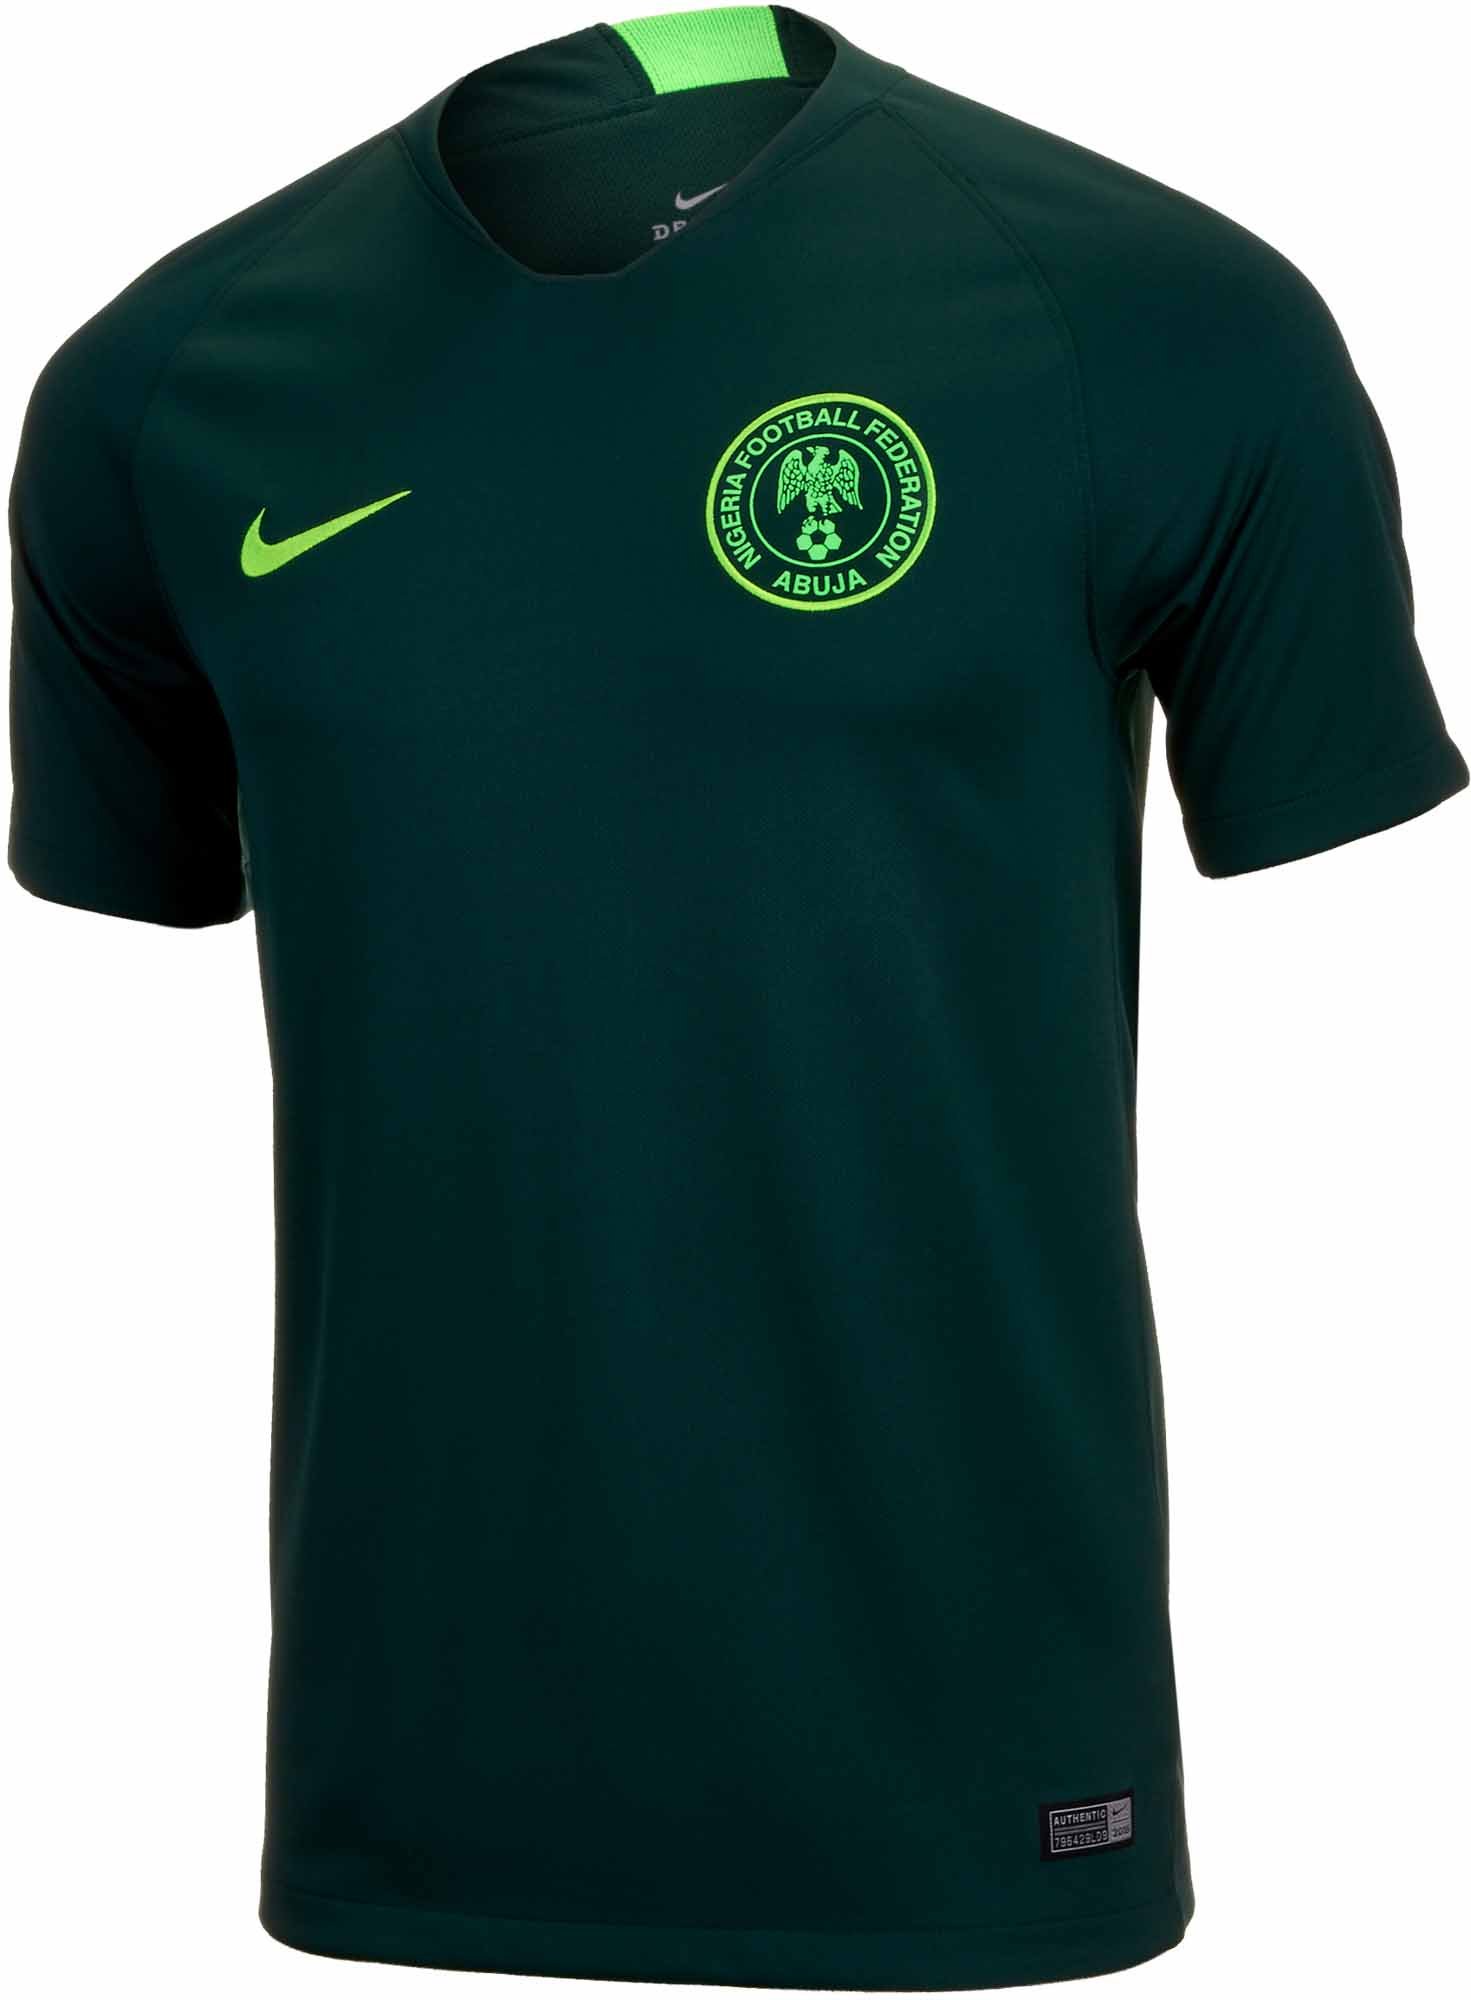 nigeria jersey